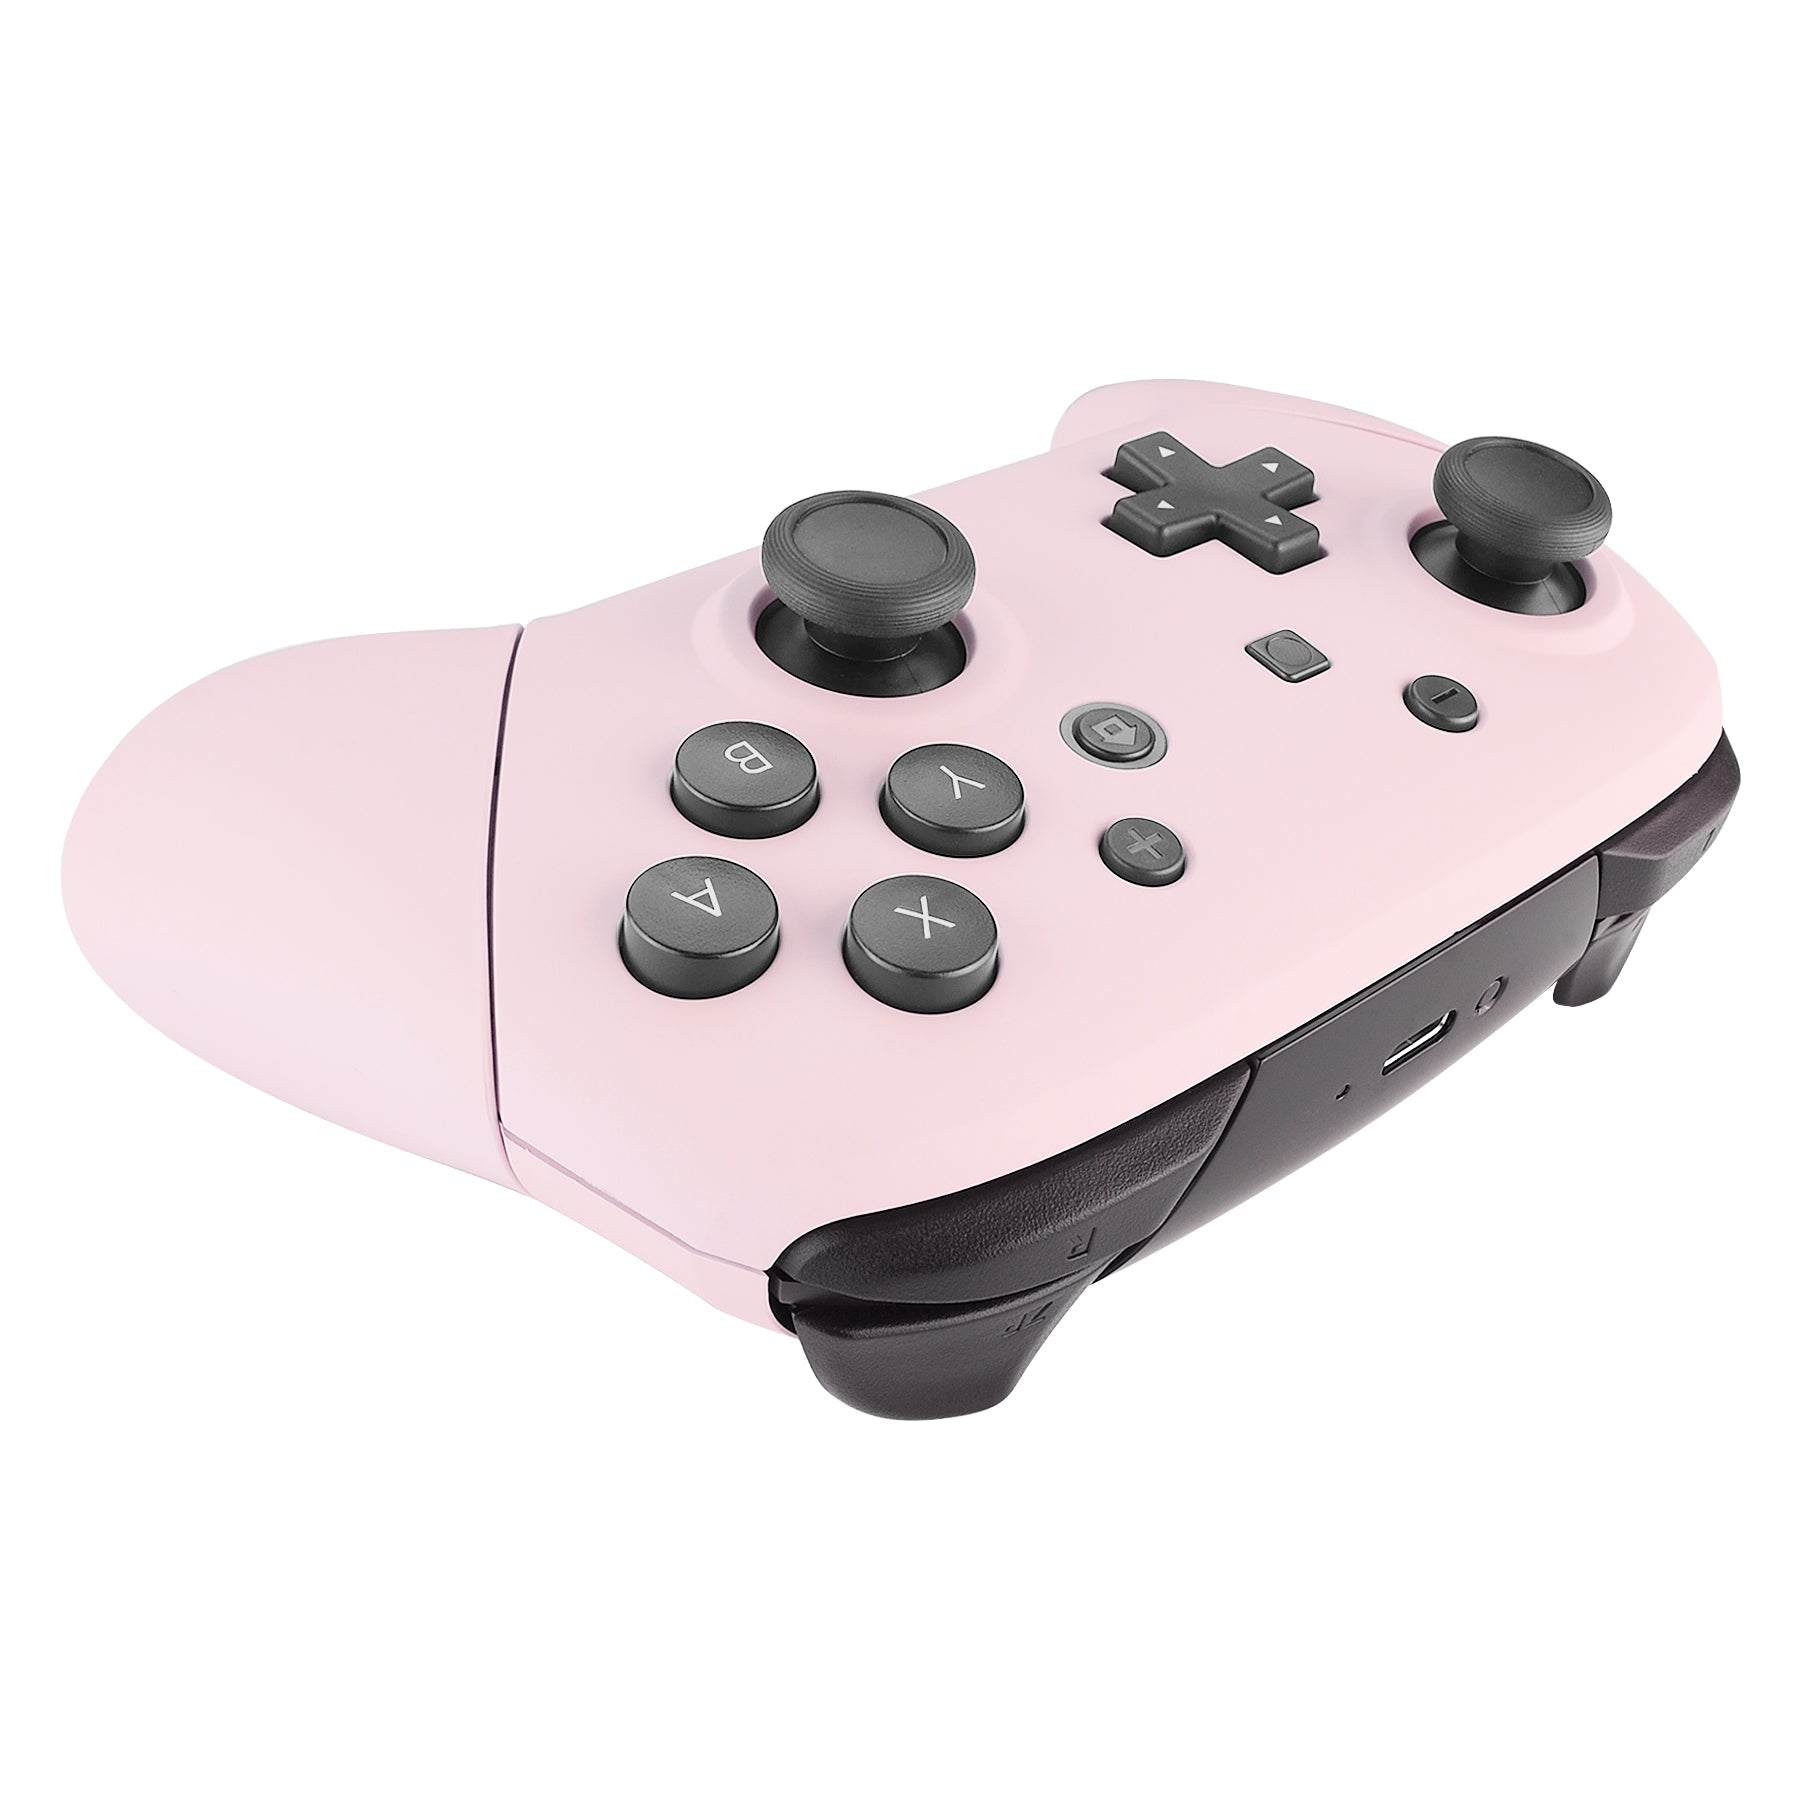 Custom Nintendo Switch Pro Controller in Sakura Pink With 